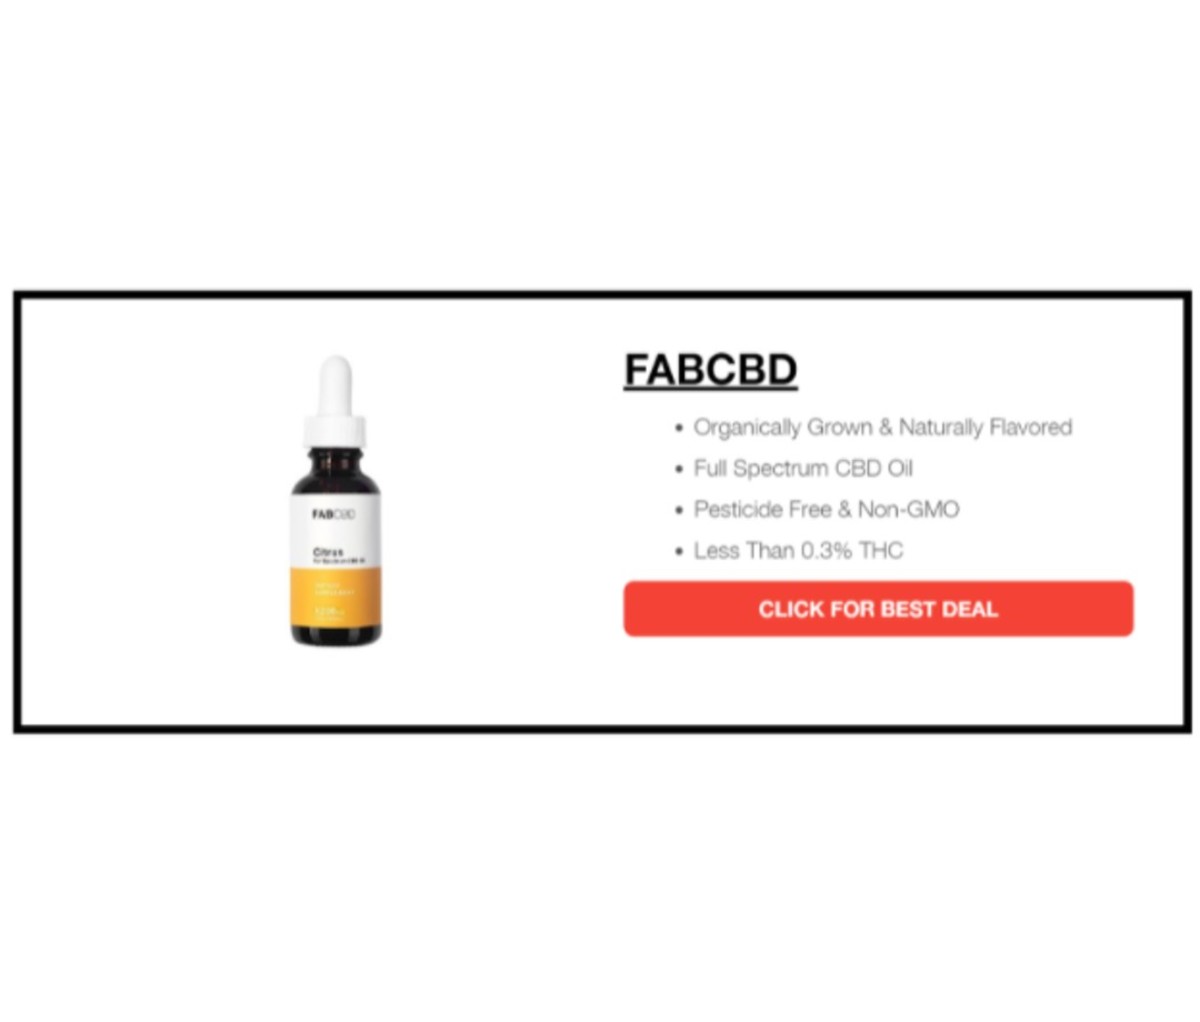 Fab CBD – Contains Less Than 0.3% THC